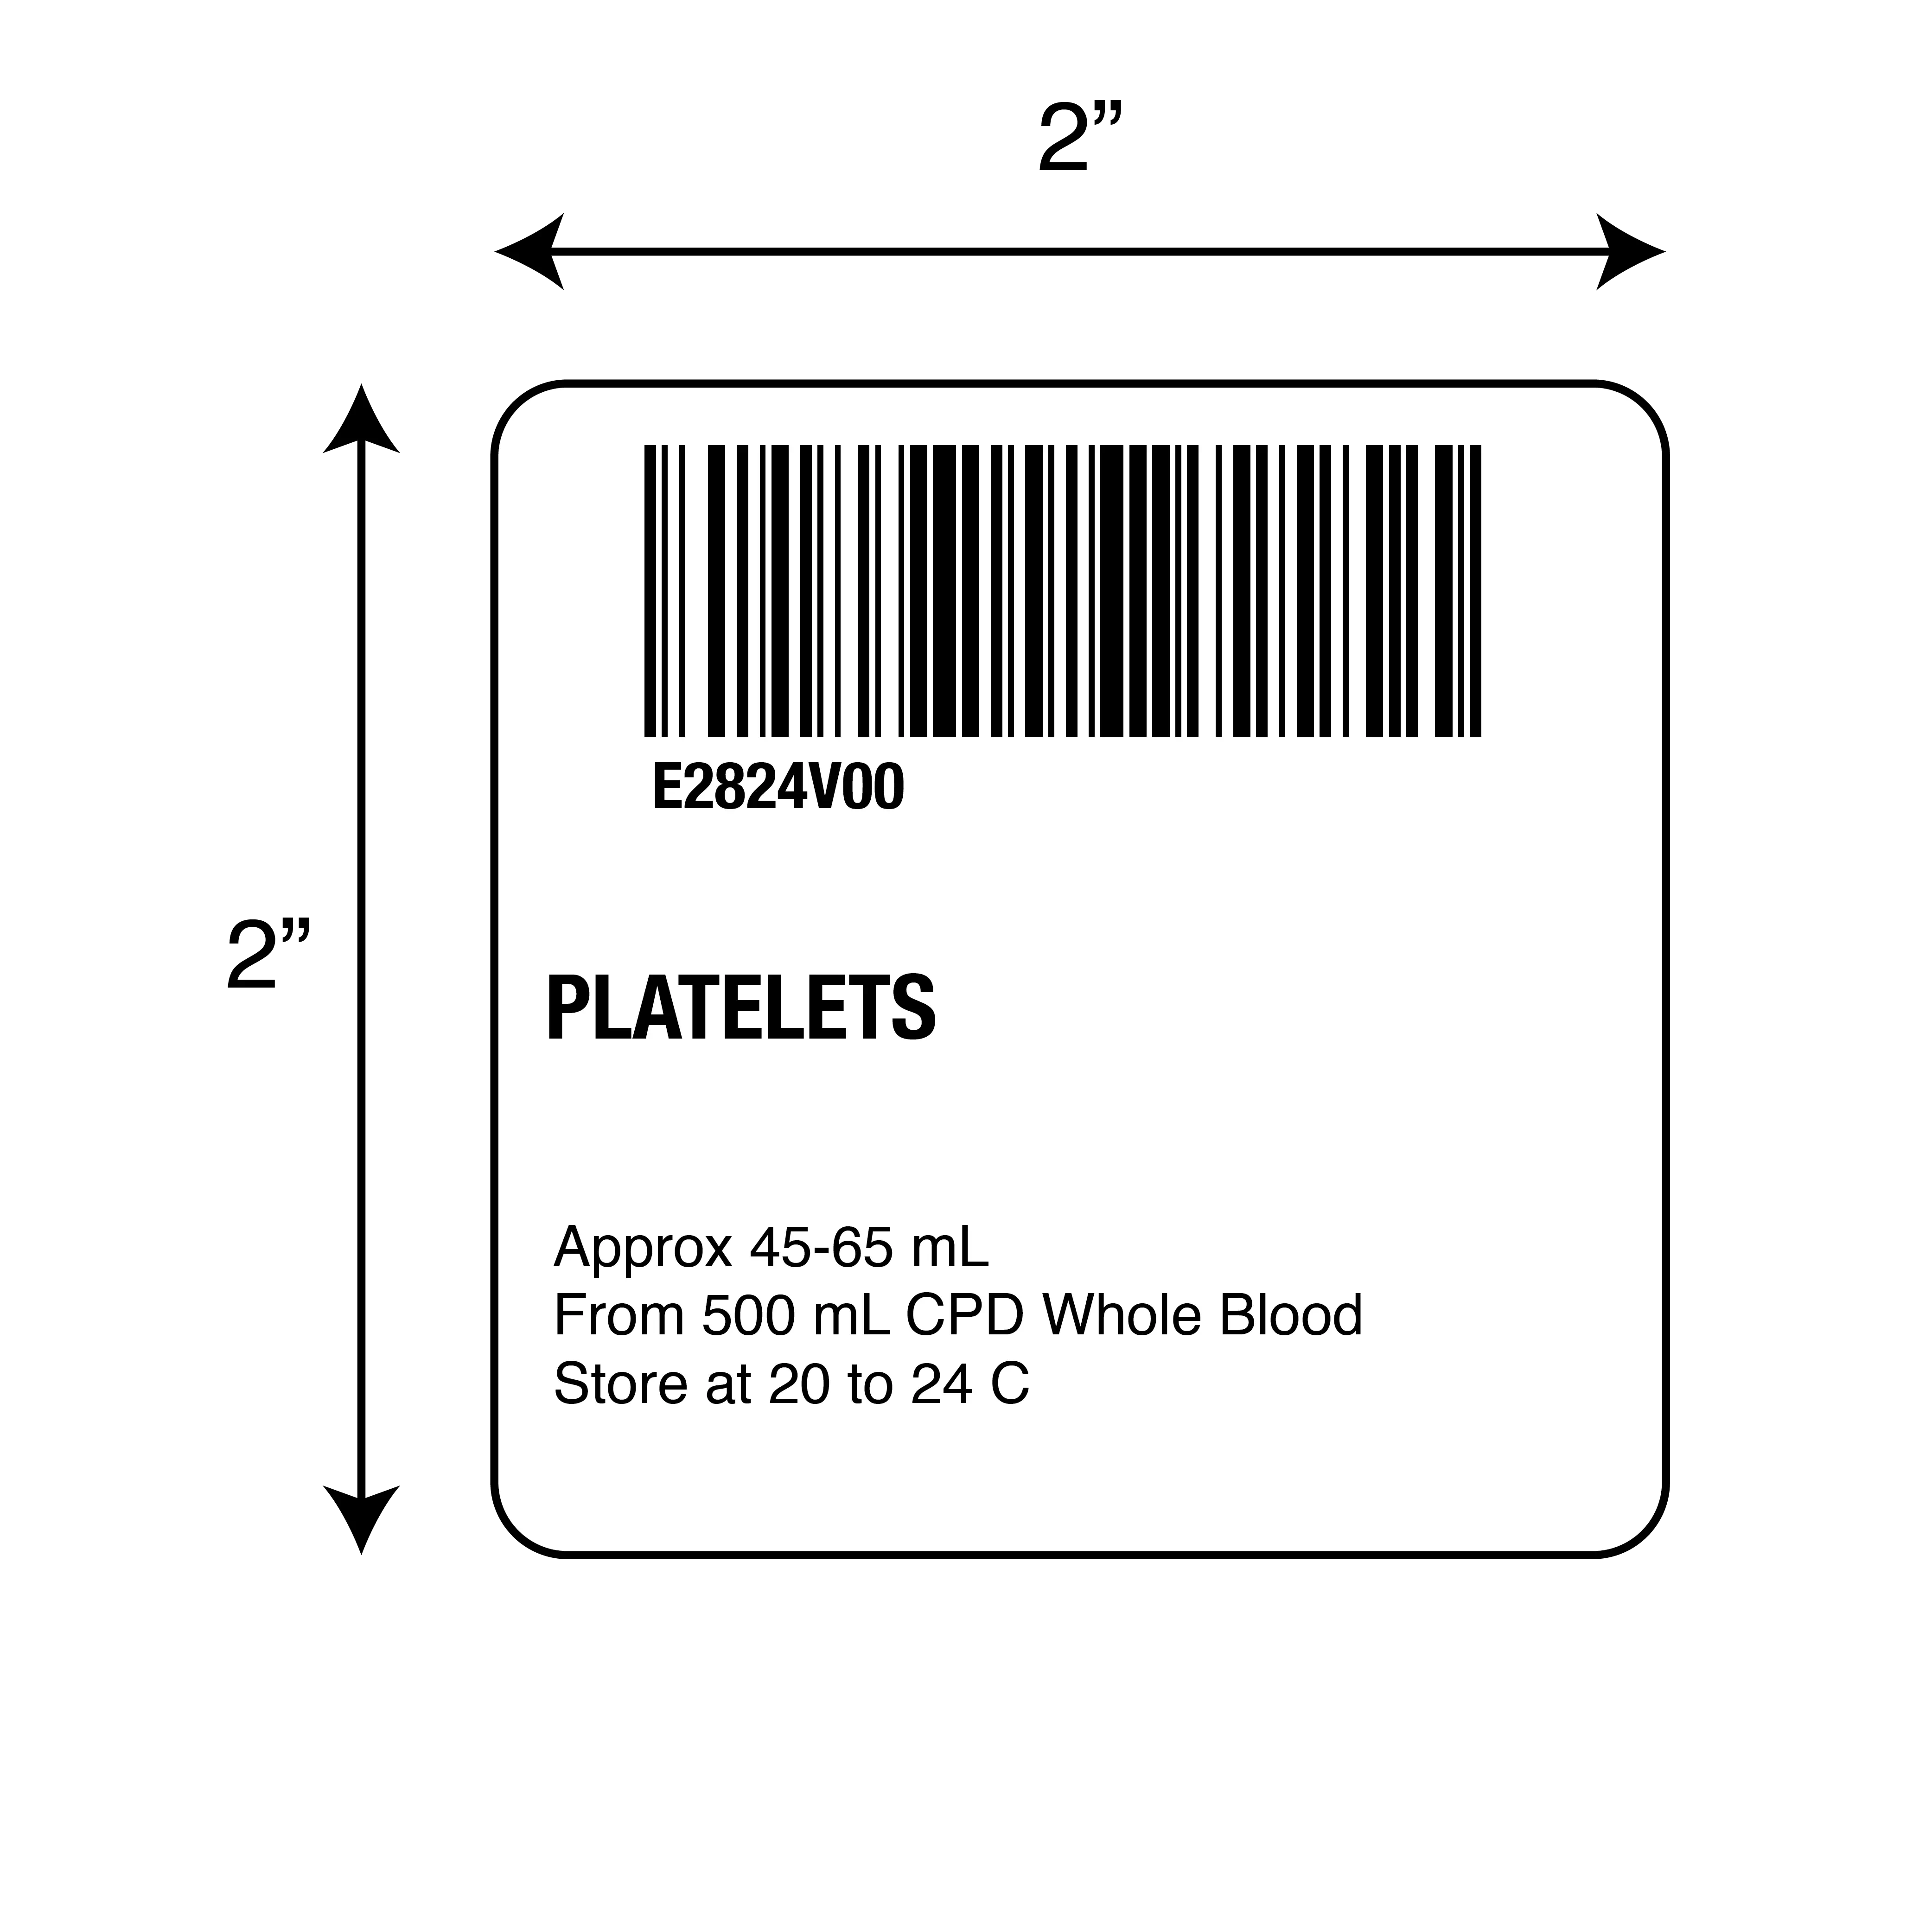 ISBT 128 Platelets